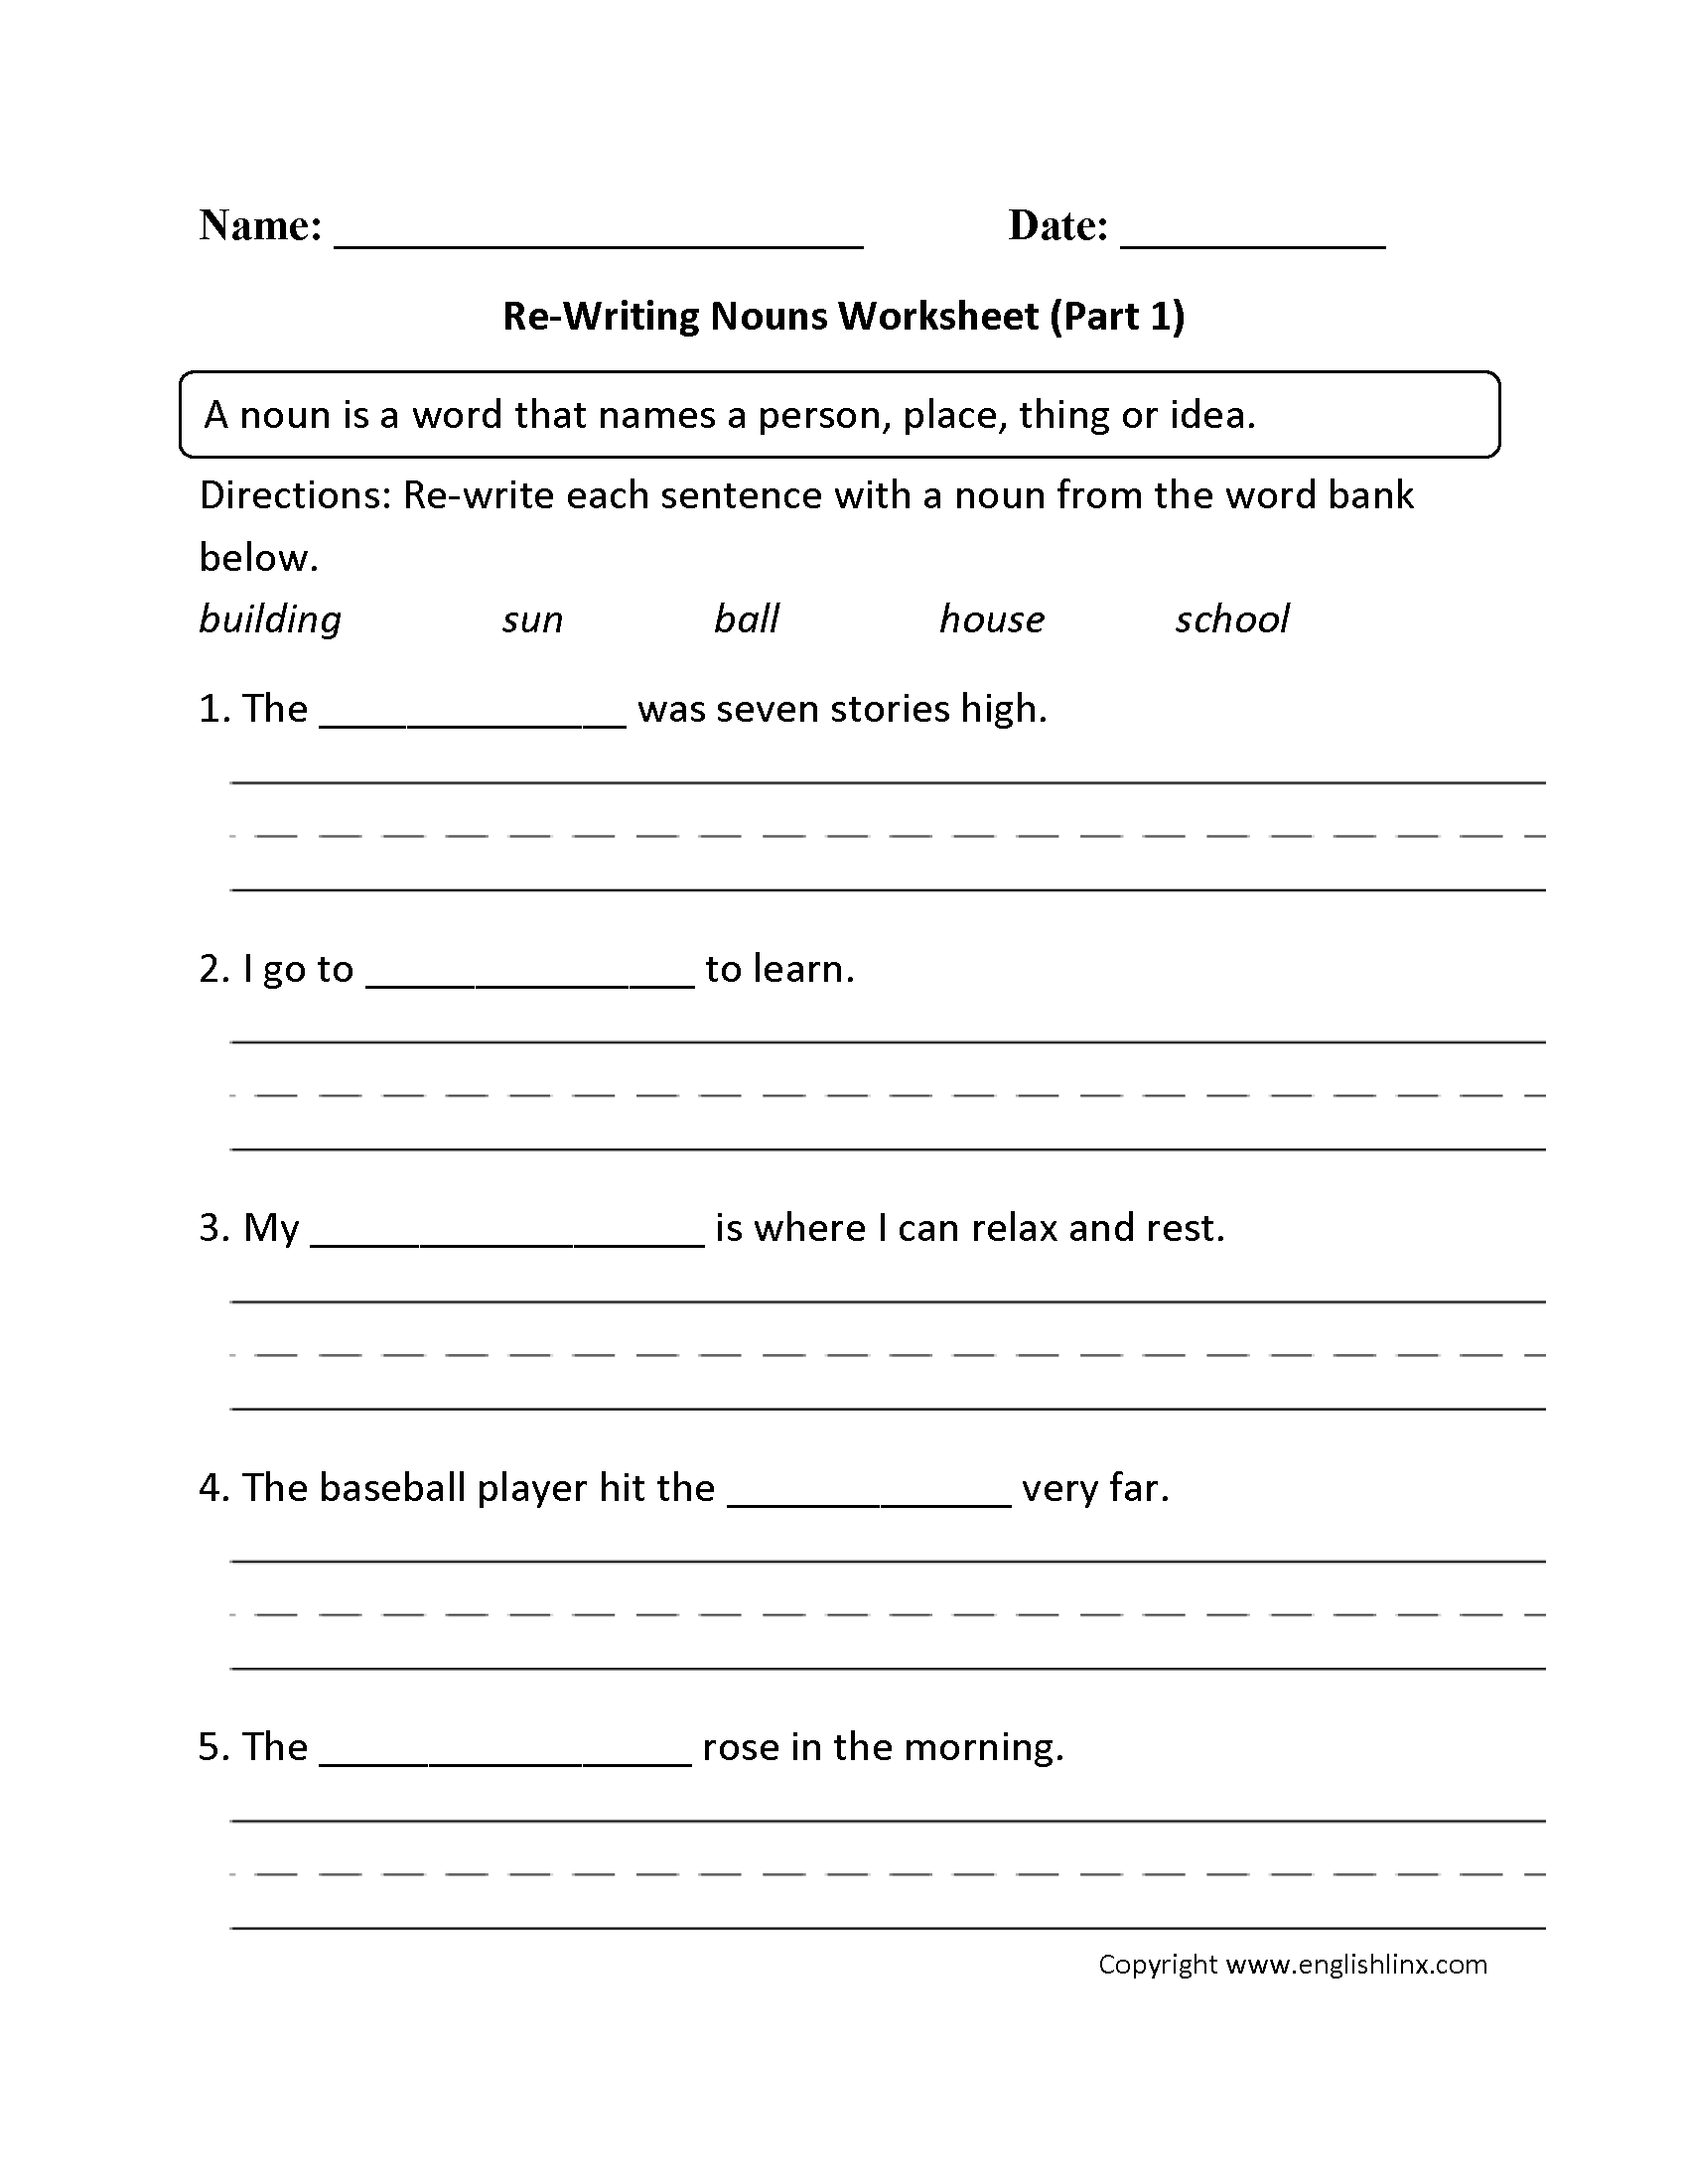 noun-worksheet-for-grade-1-esl-worksheets-for-class-1-class-1-english-grammar-worksheets